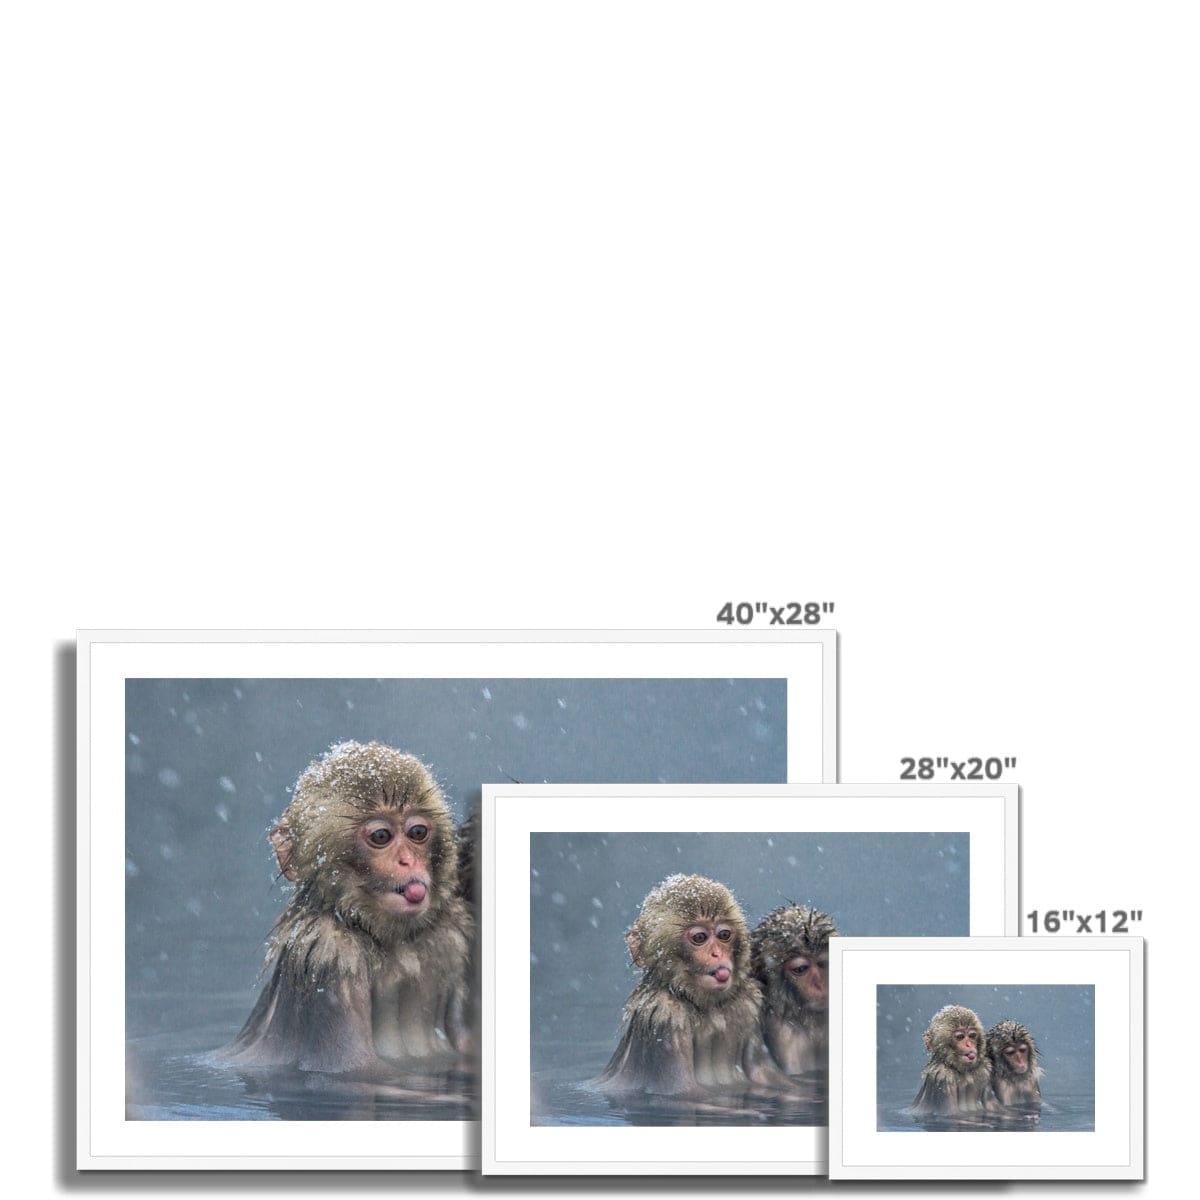 Cheeky Monkey Framed & Mounted Print - Pixel Gallery